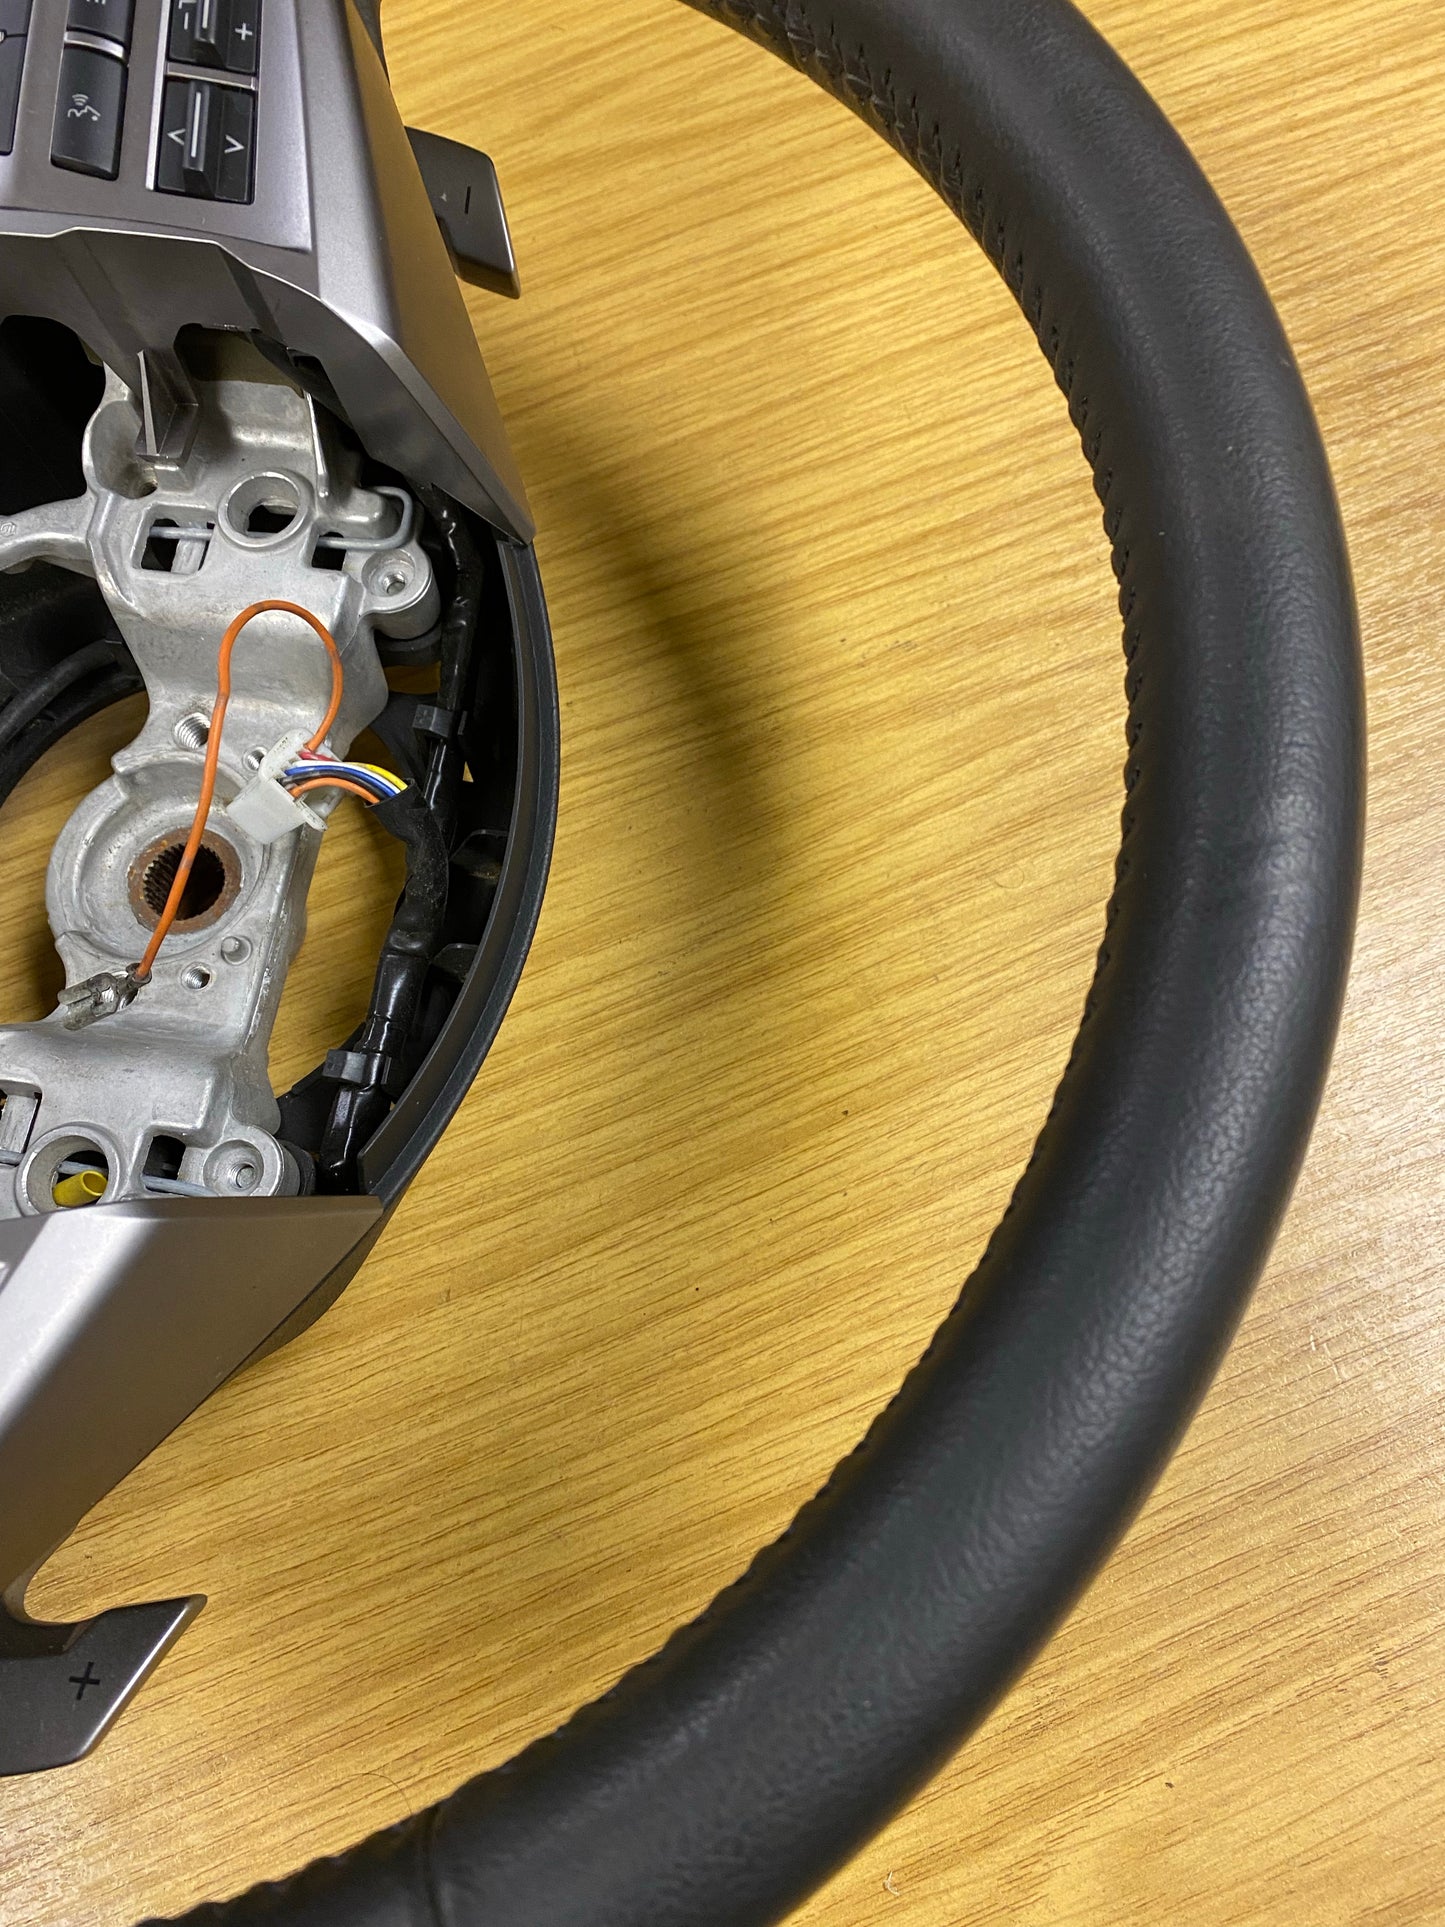 Subaru Impreza 2.0 Auto Automatic Paddle Shift Multi-Functional Steering Wheel